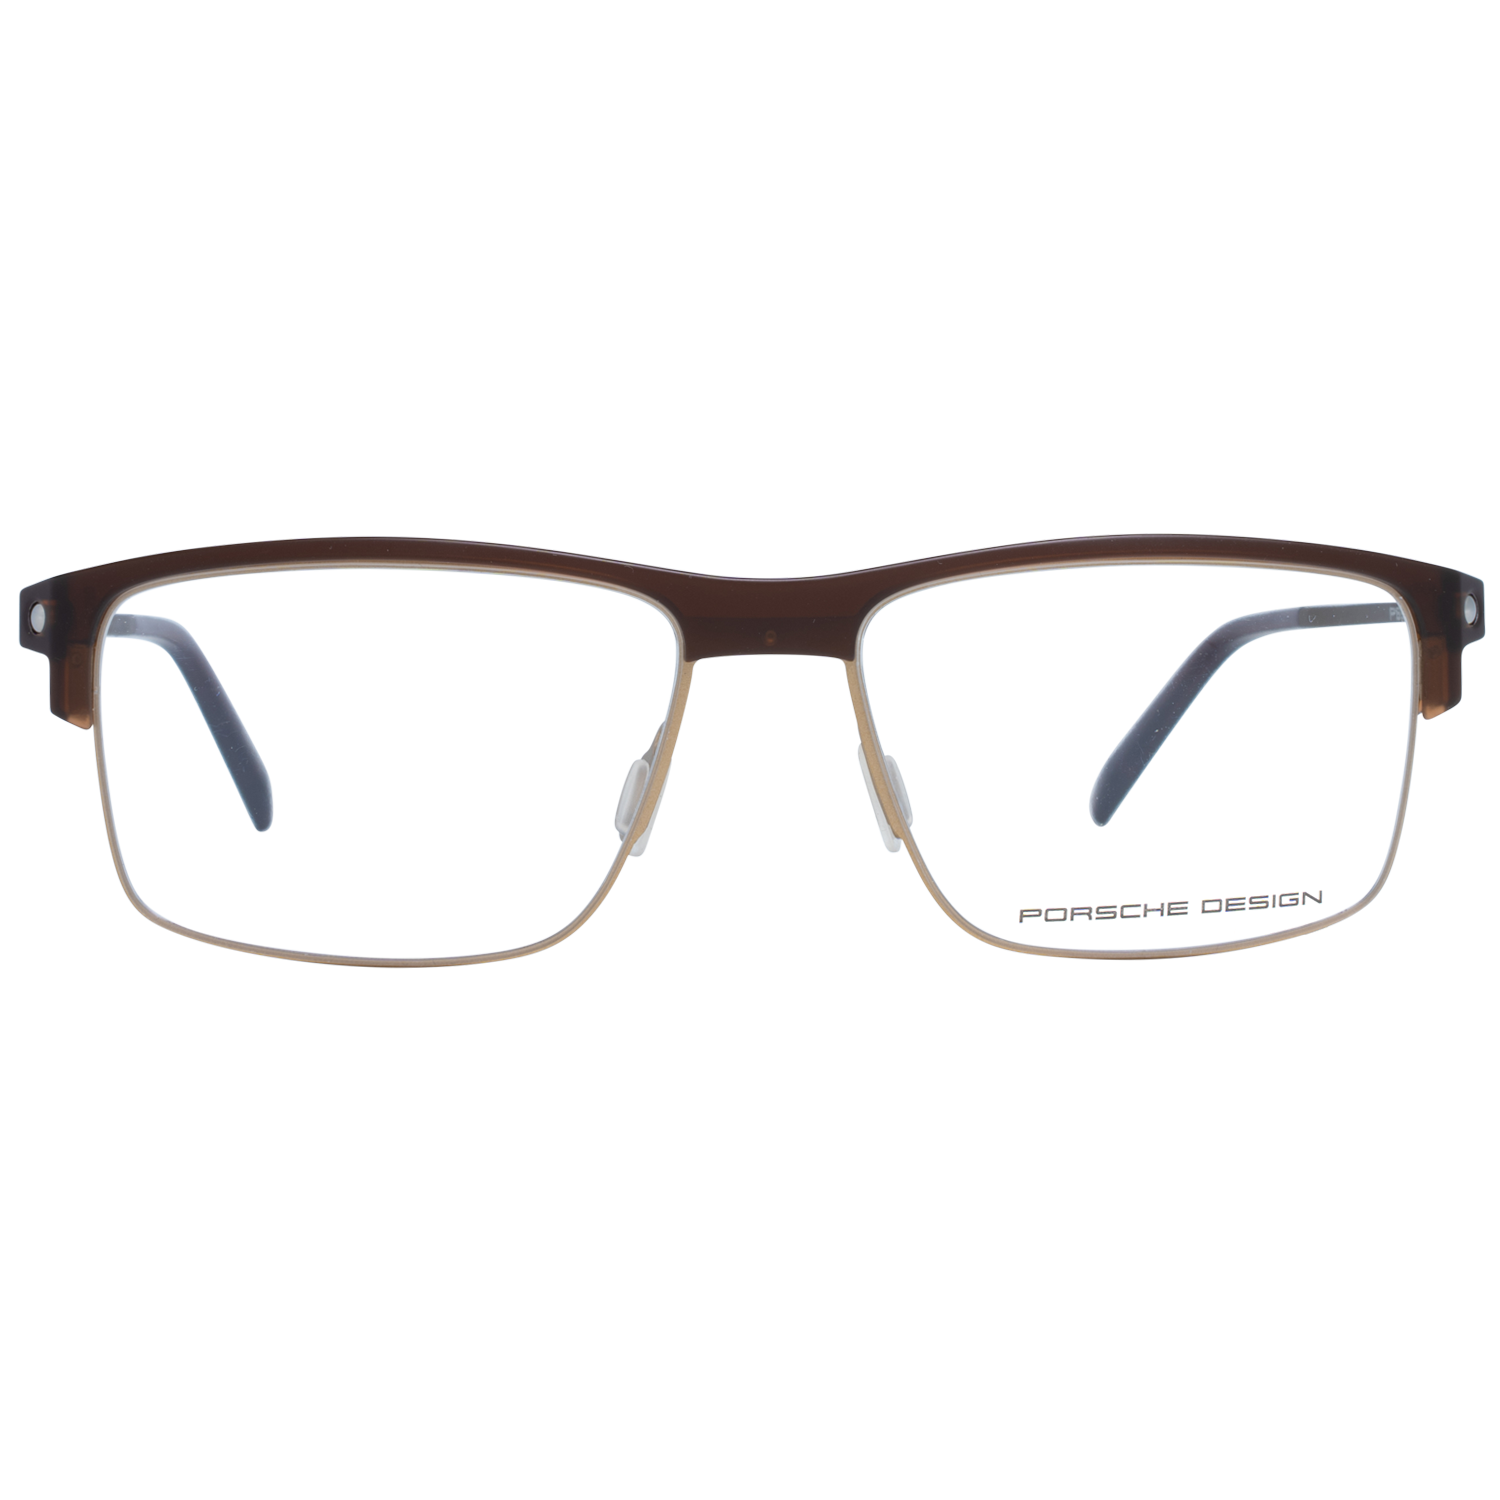 Porsche Design Eyeglasses Porsche Design Glasses Frames P8361 B 55mm Eyeglasses Eyewear UK USA Australia 